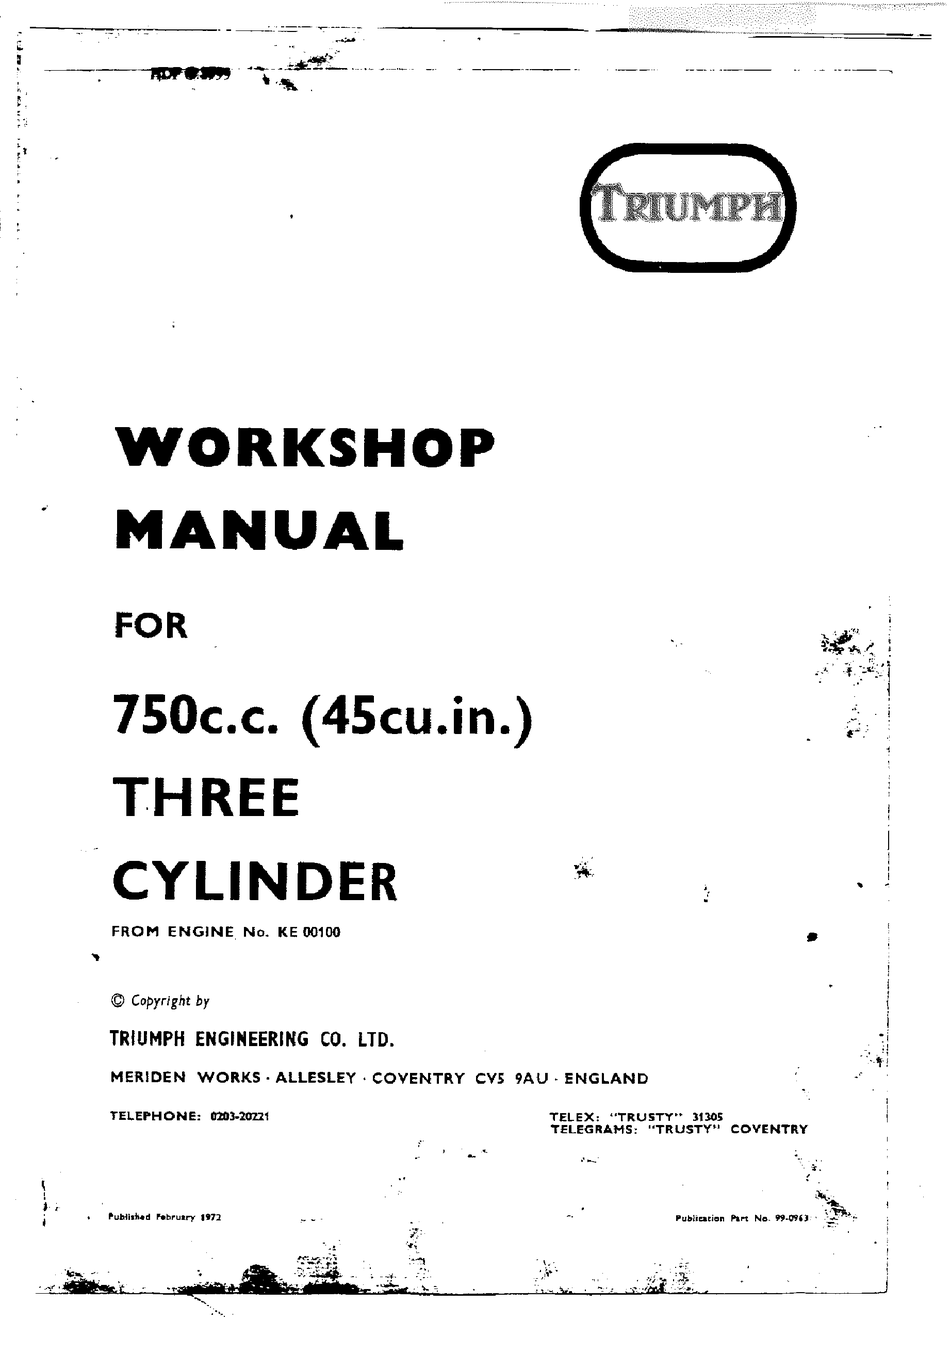 Triumph Trident T150r Work Manual